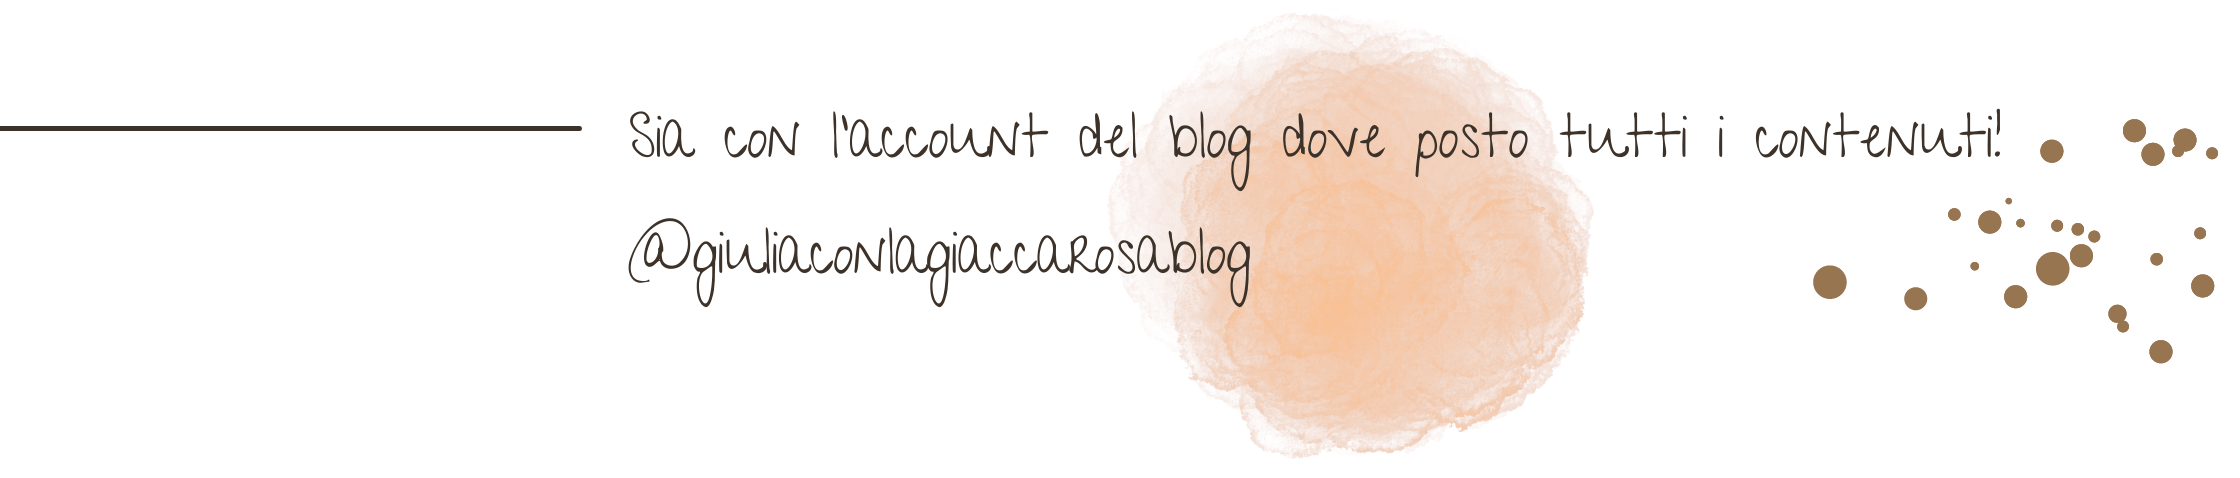 Conosciamoci su instagram, mi trovi come @giuliaconlagiaccarosablog